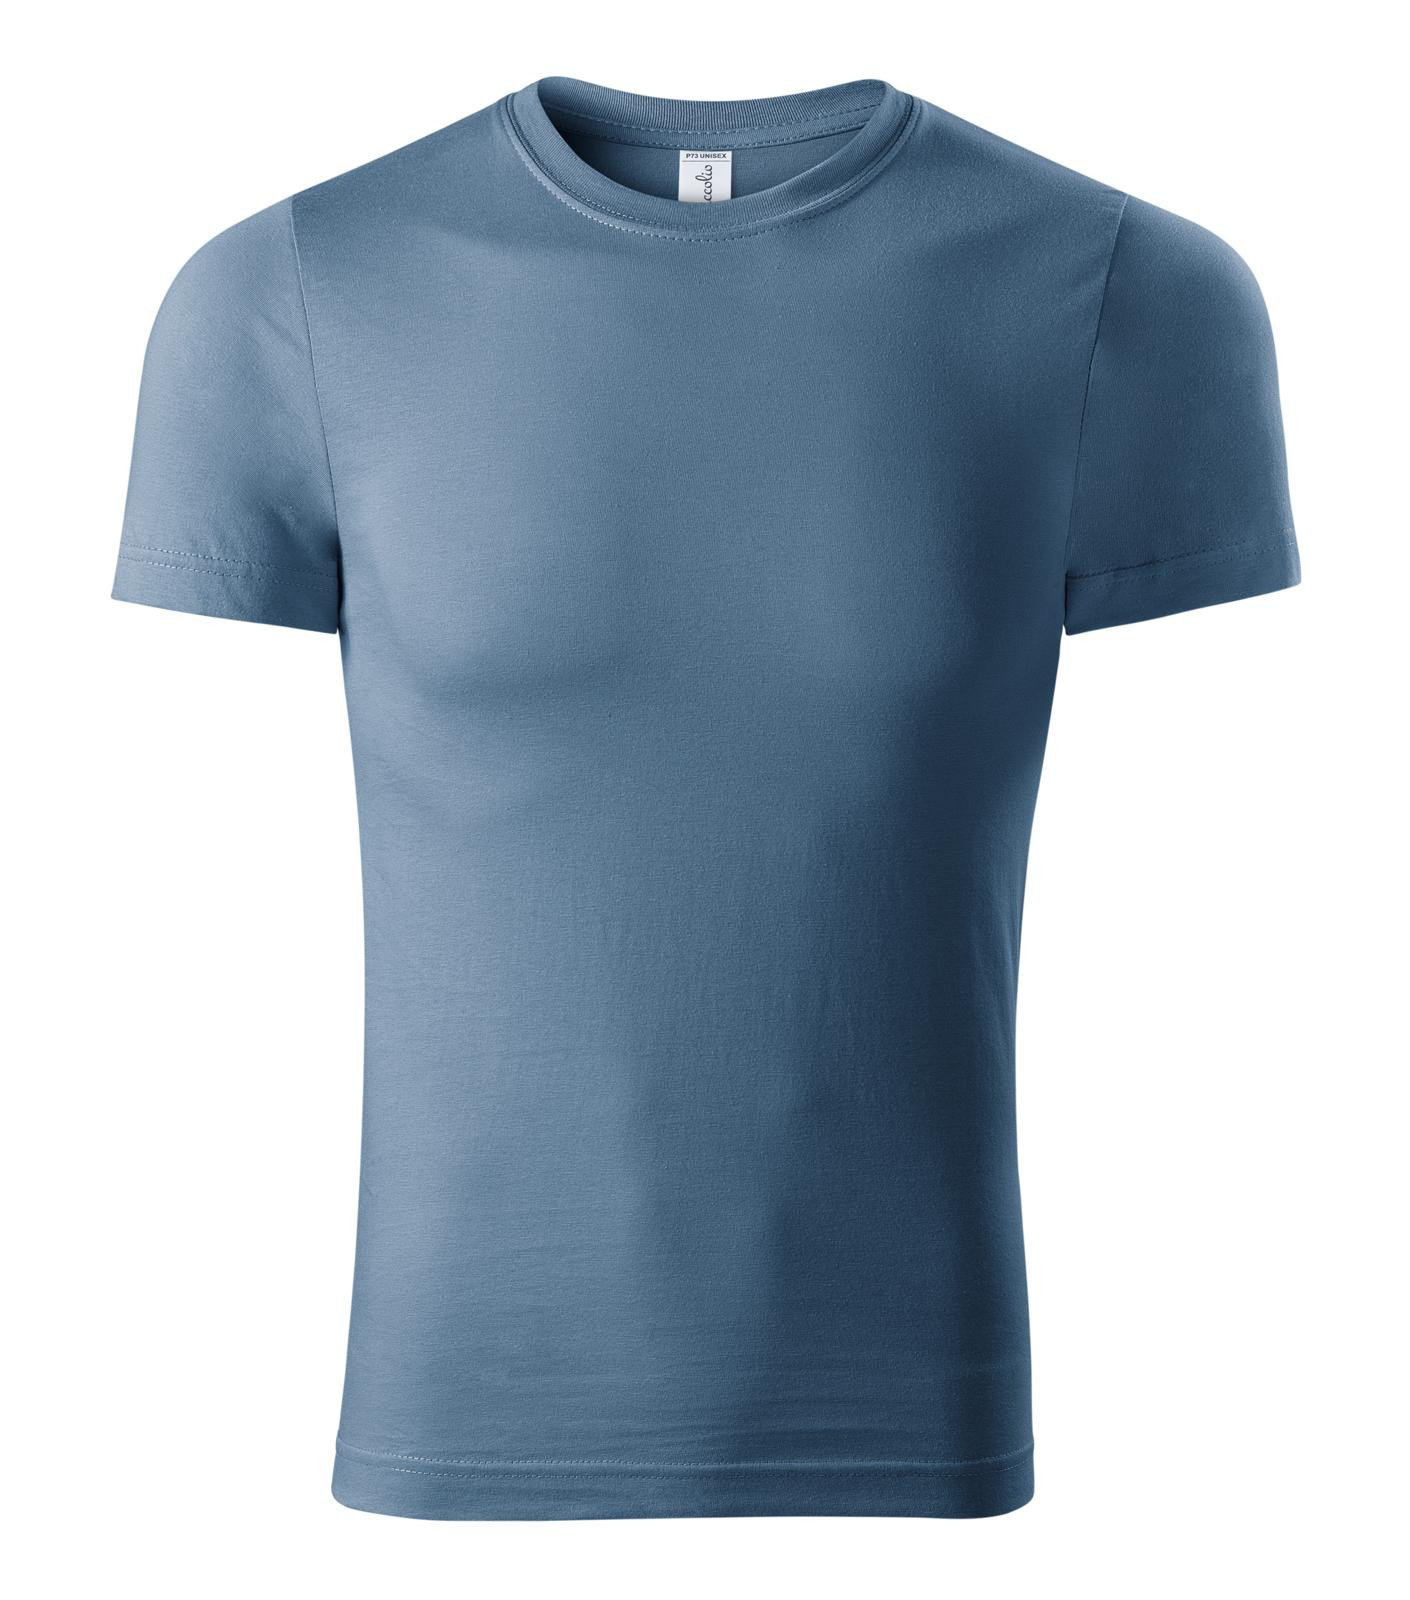 Unisex tričko Piccolio Paint P73 - veľkosť: XL, farba: denim